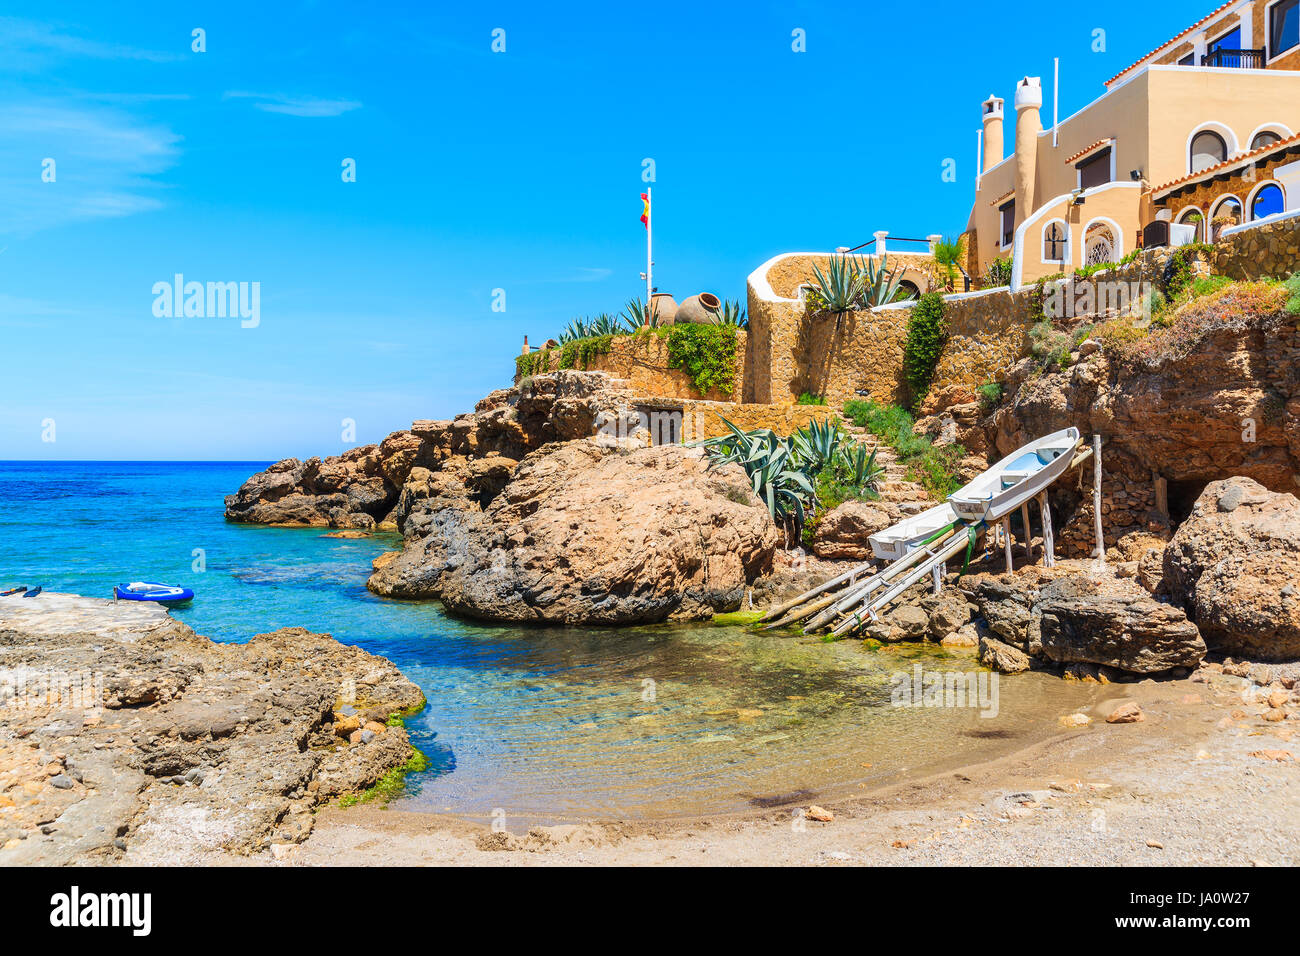 Small bay among rocks in Cala Xarraca bay, Ibiza island, Spain Stock Photo